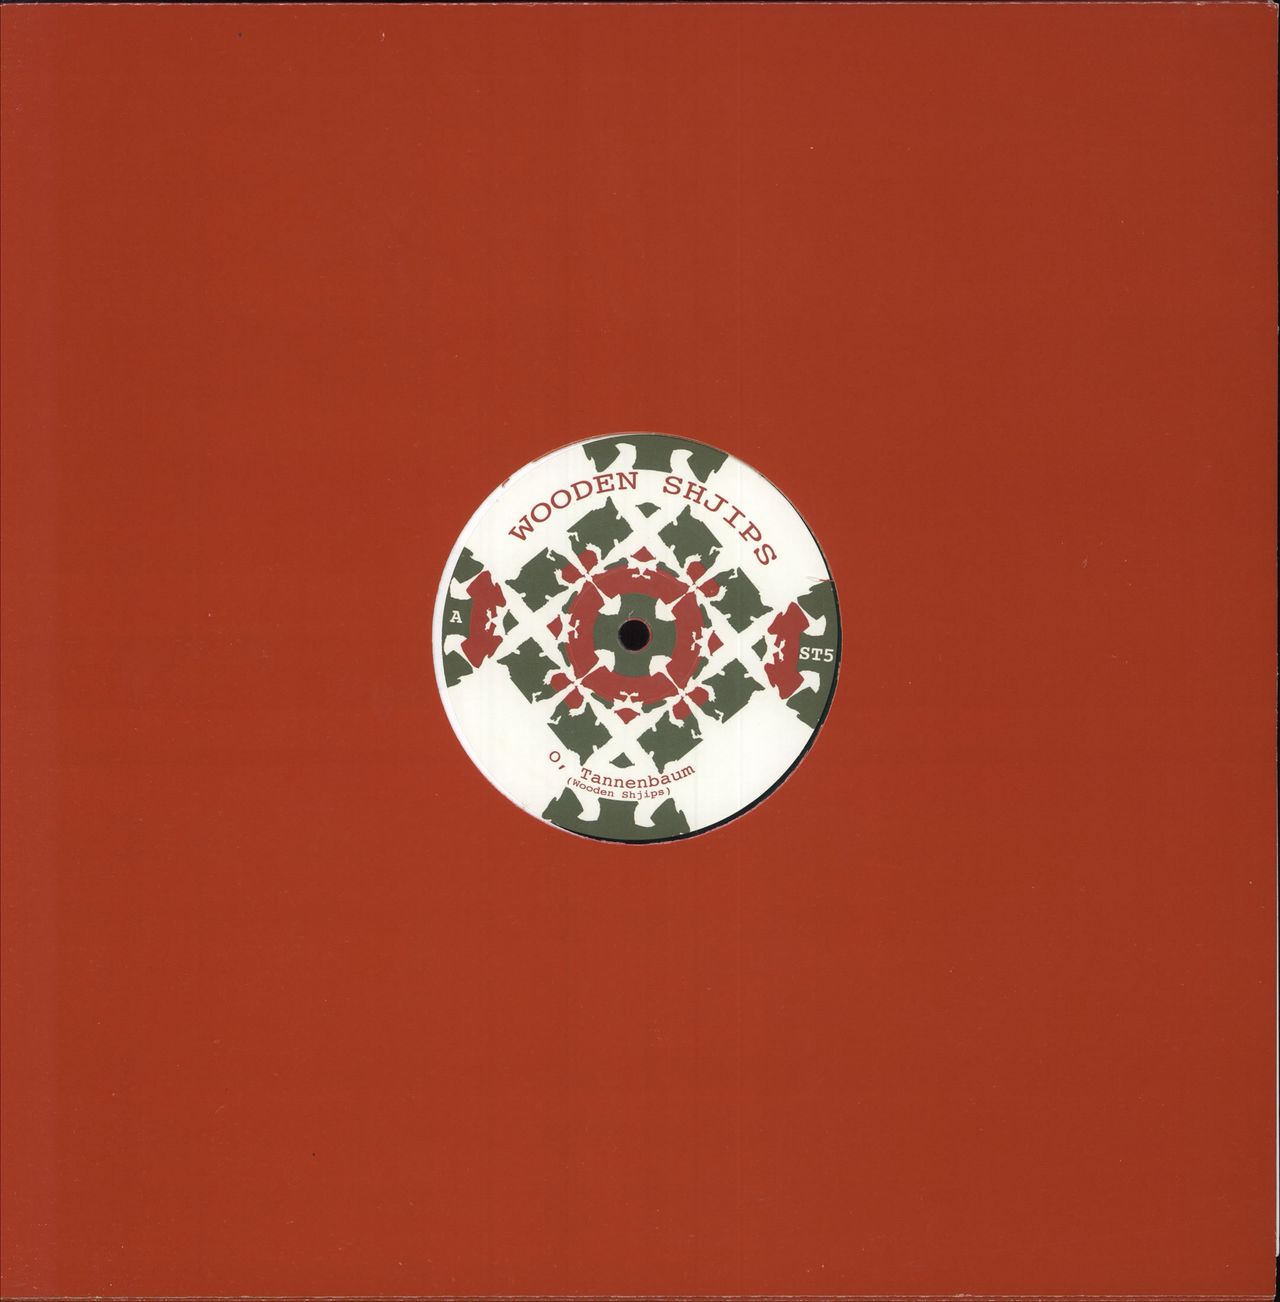 Wooden O, Tannenbaum - Green Vinyl + Red Sleeve US 12" vinyl — RareVinyl.com